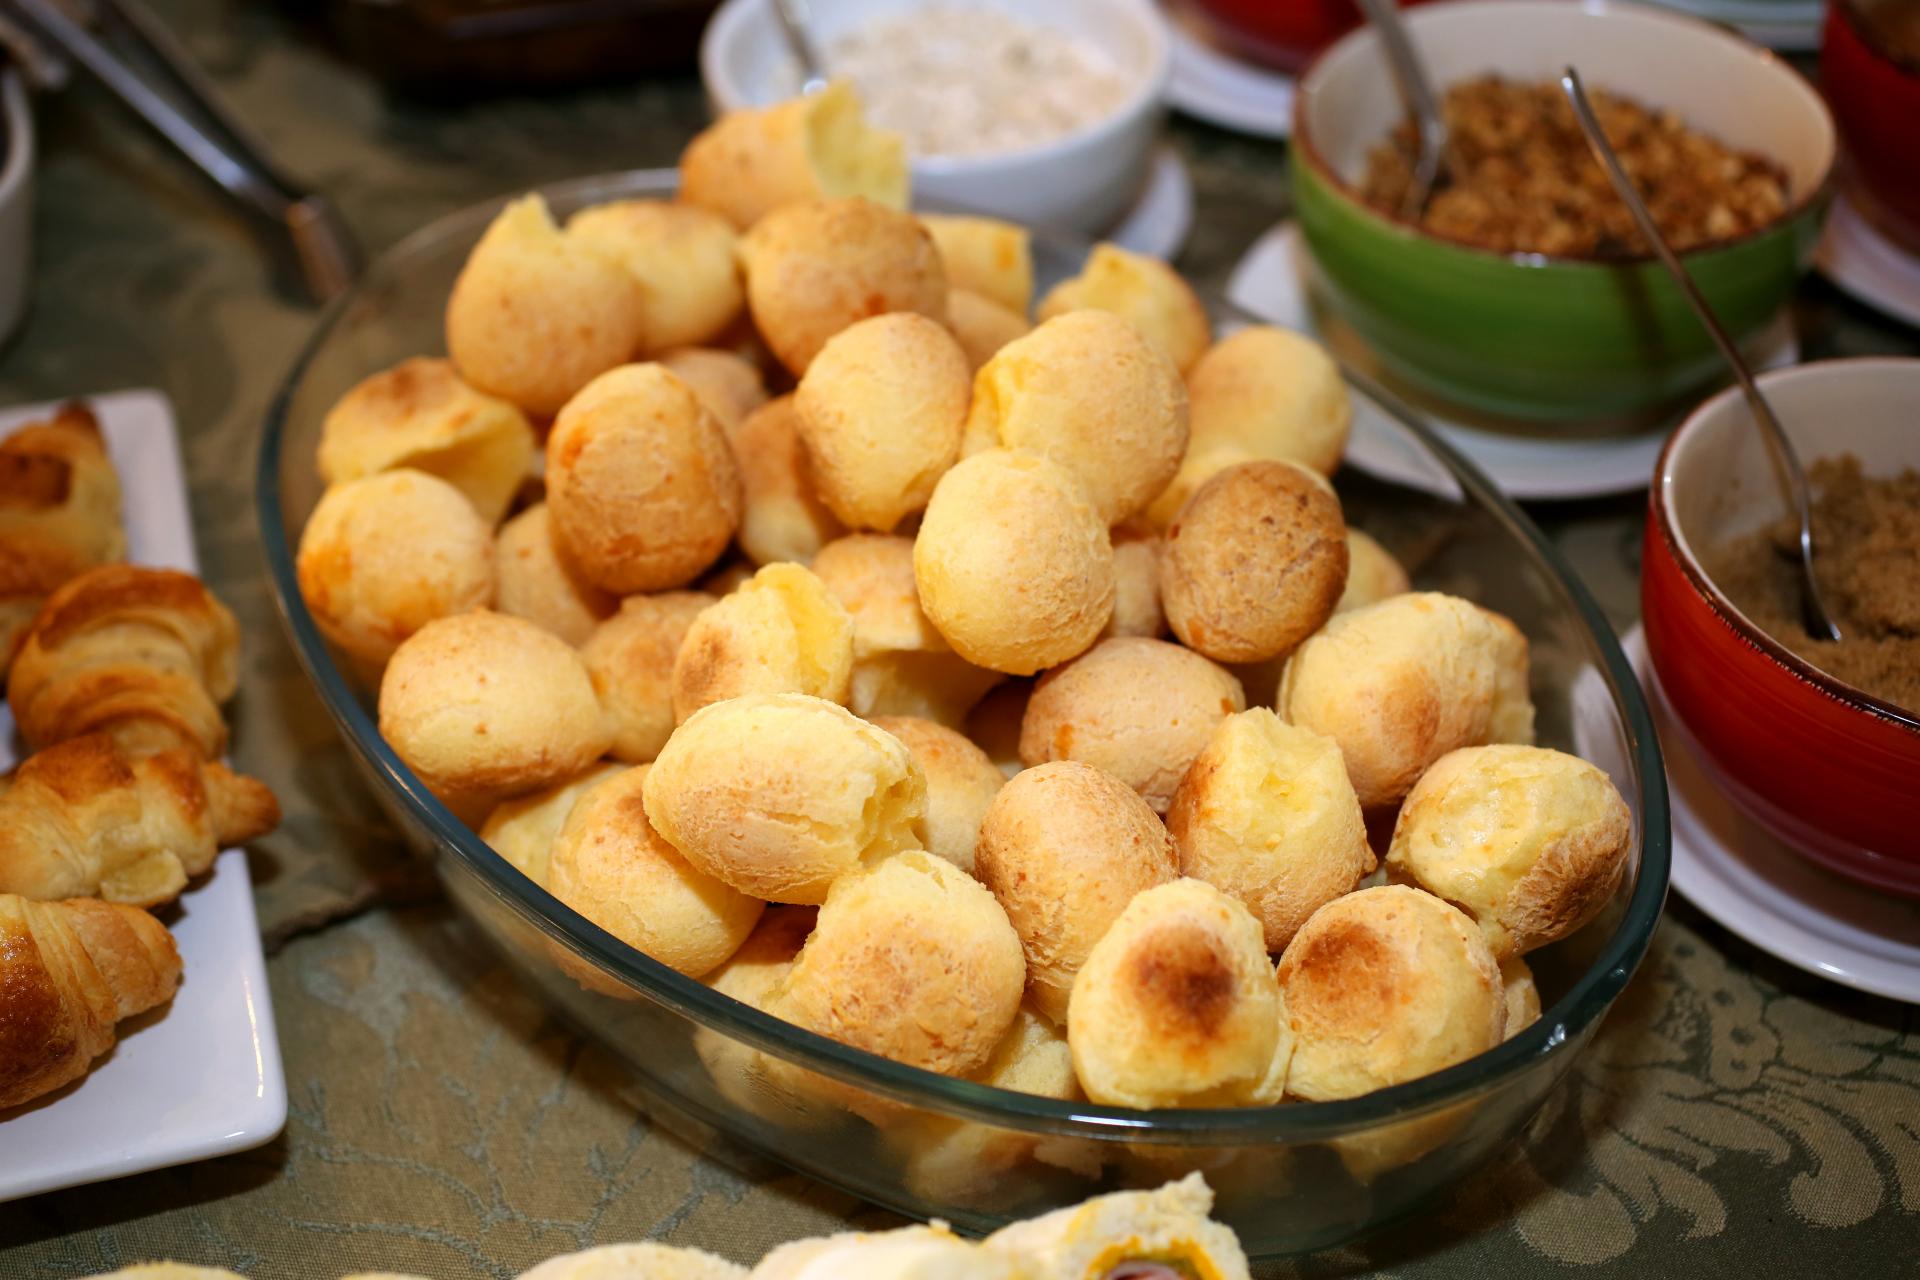 Pao de Queijo is the most famous Brazilian snack